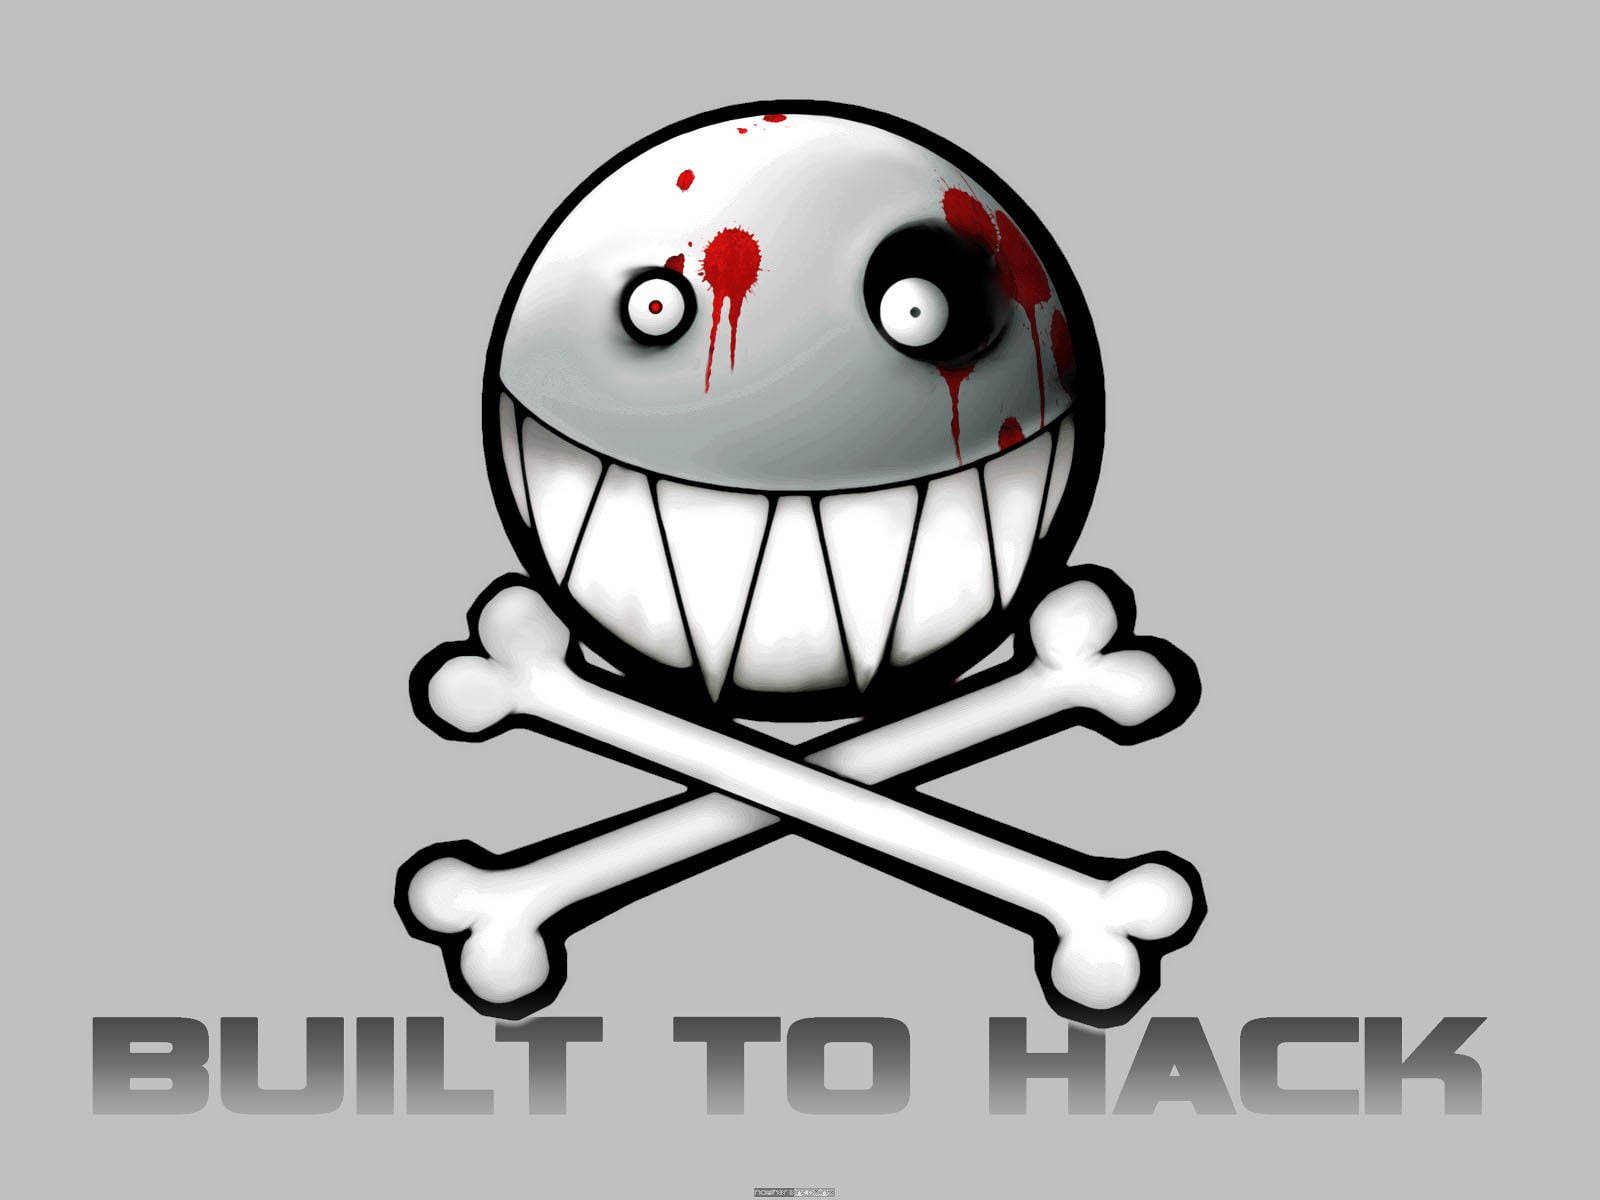 Bloody Smiley Face Hacker Logo Wallpaper